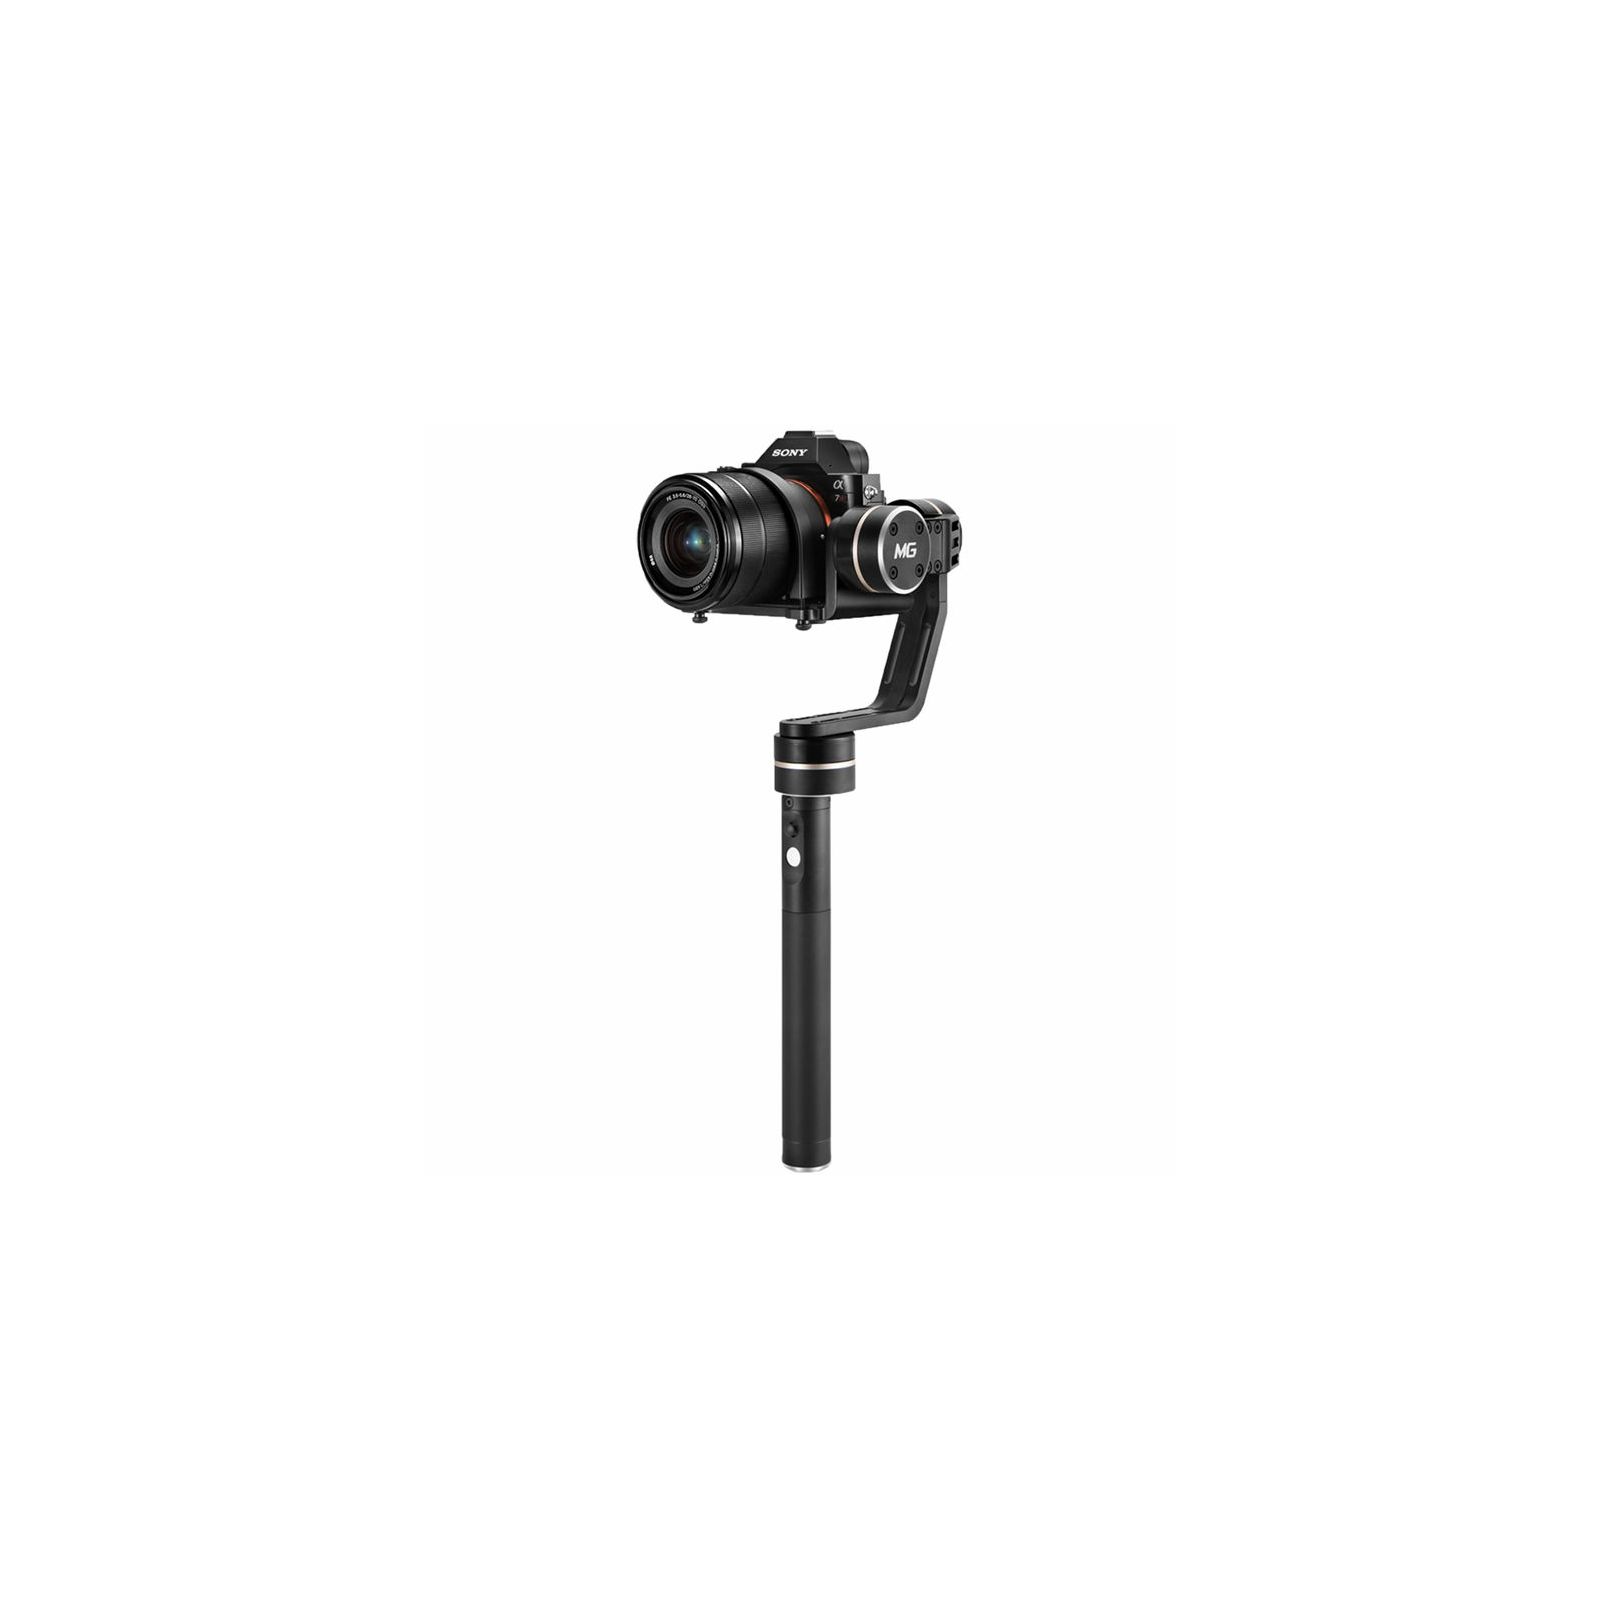 Feiyu Tech MG 3-Axis Handheld Gimbal for Mirrorless Cameras FY-MG kamera 3D gimbal